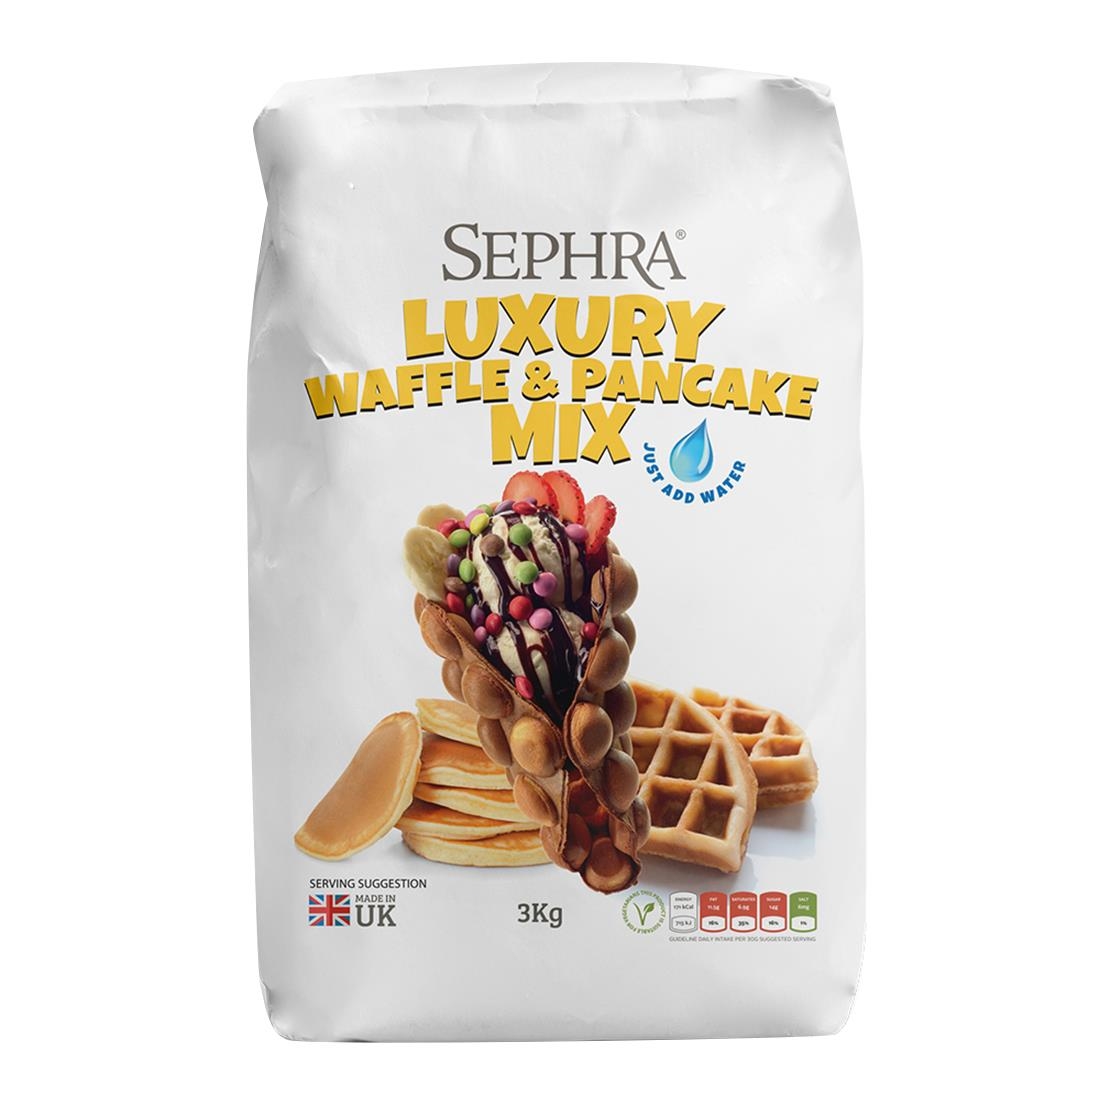 Sephra Waffle and Pancake Mix 3kg Pack of 4 (HU128)